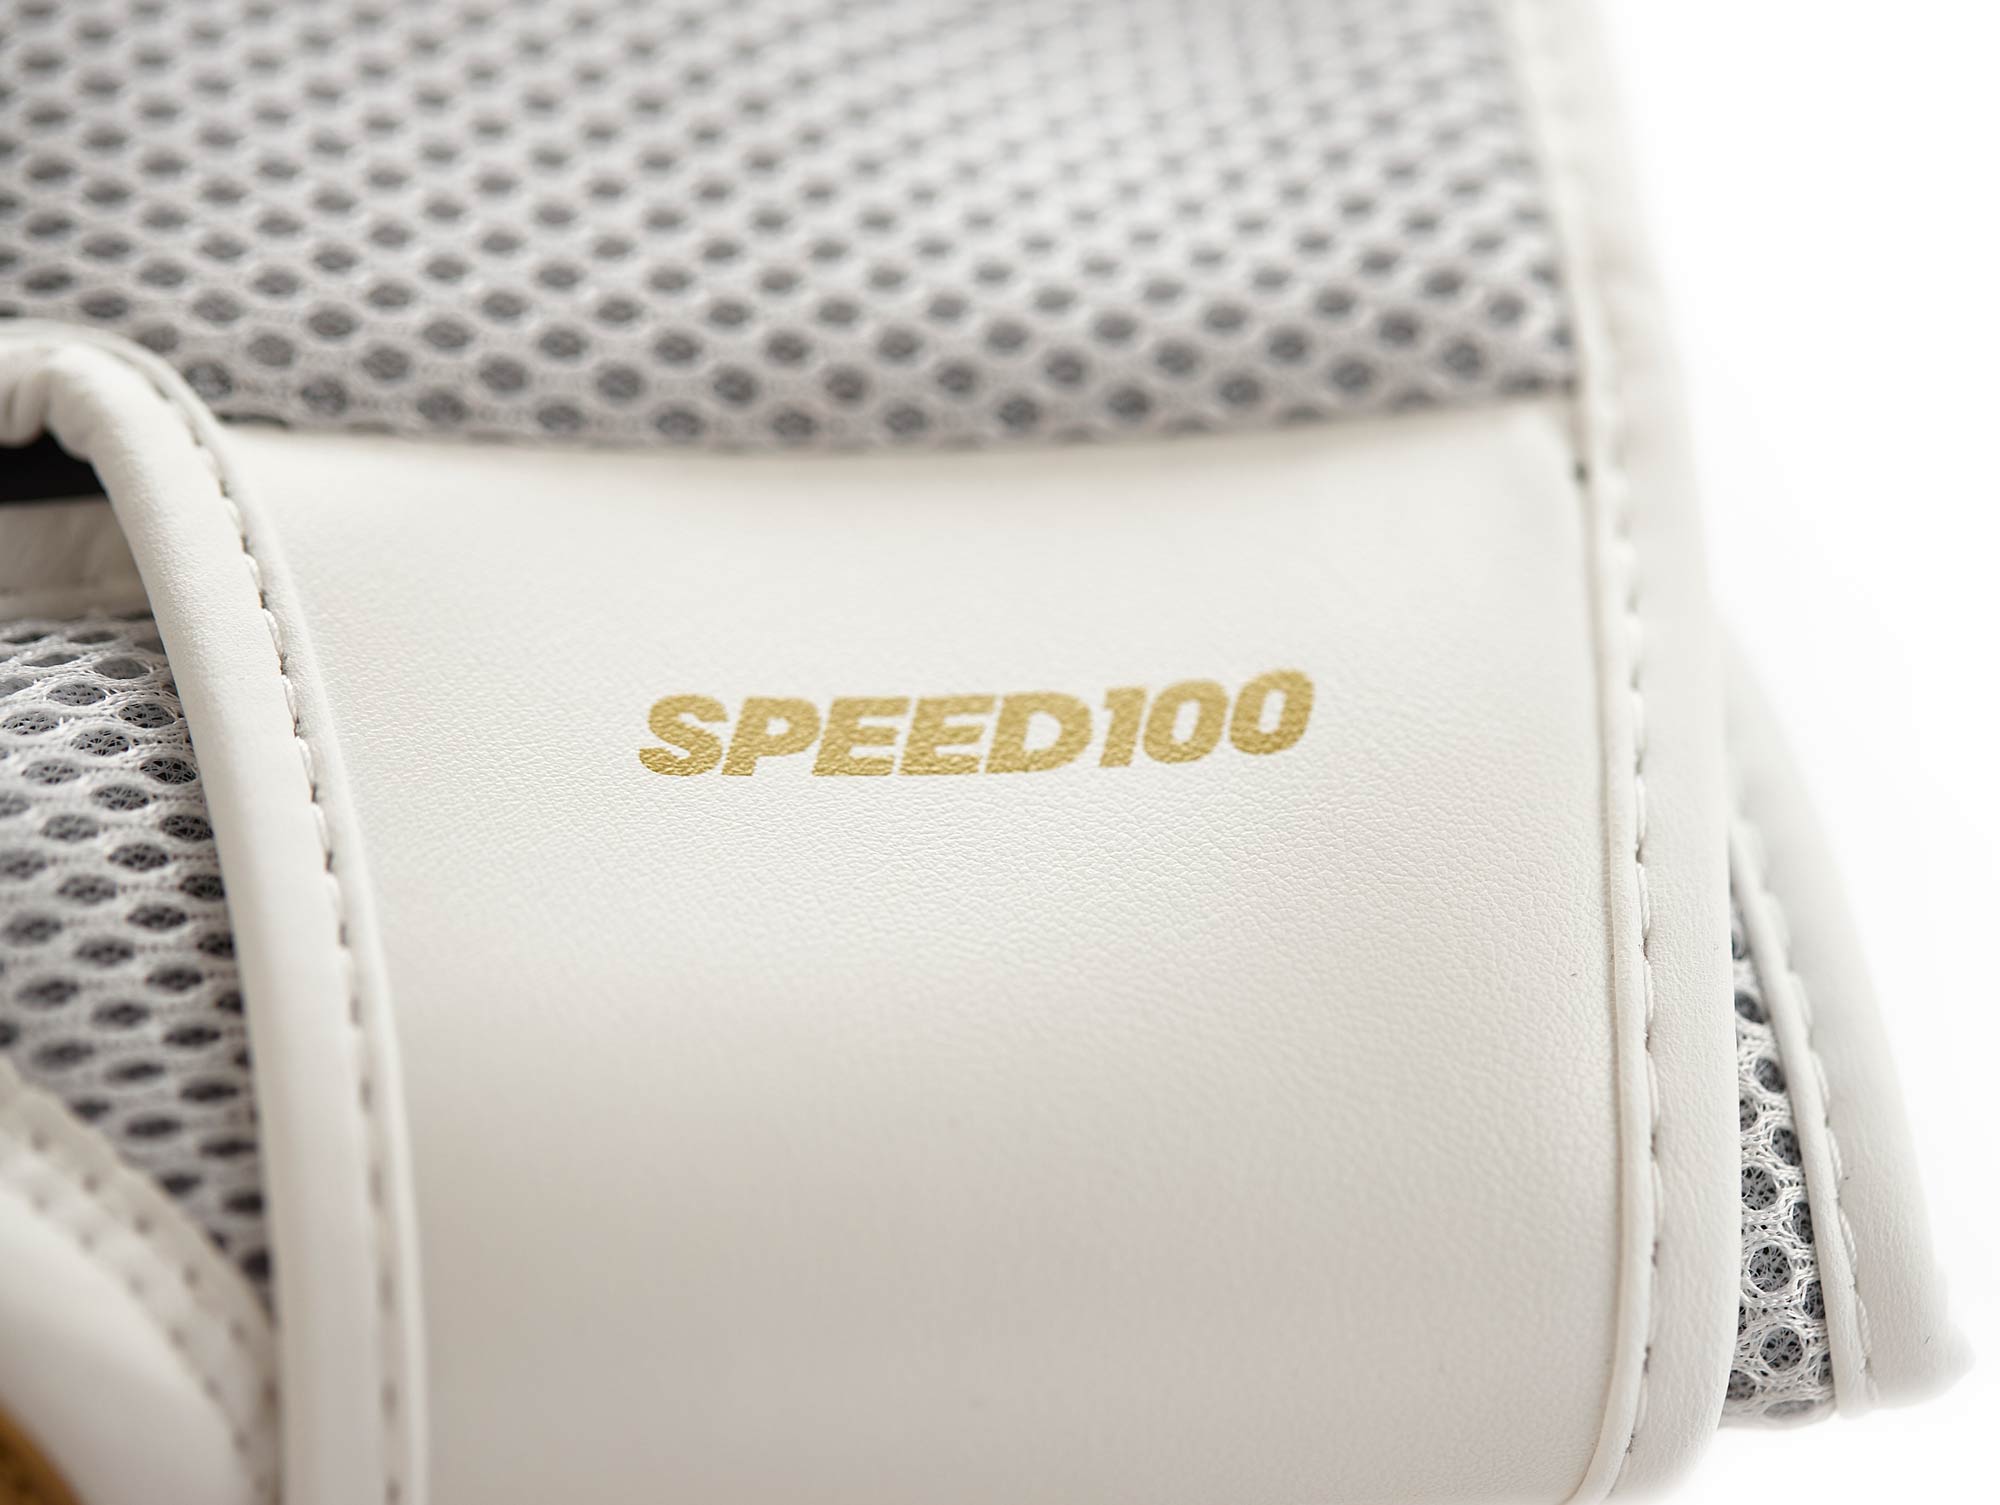 adidas Boxhandschuhe Speed 100, ADISBG100 weiß/gold